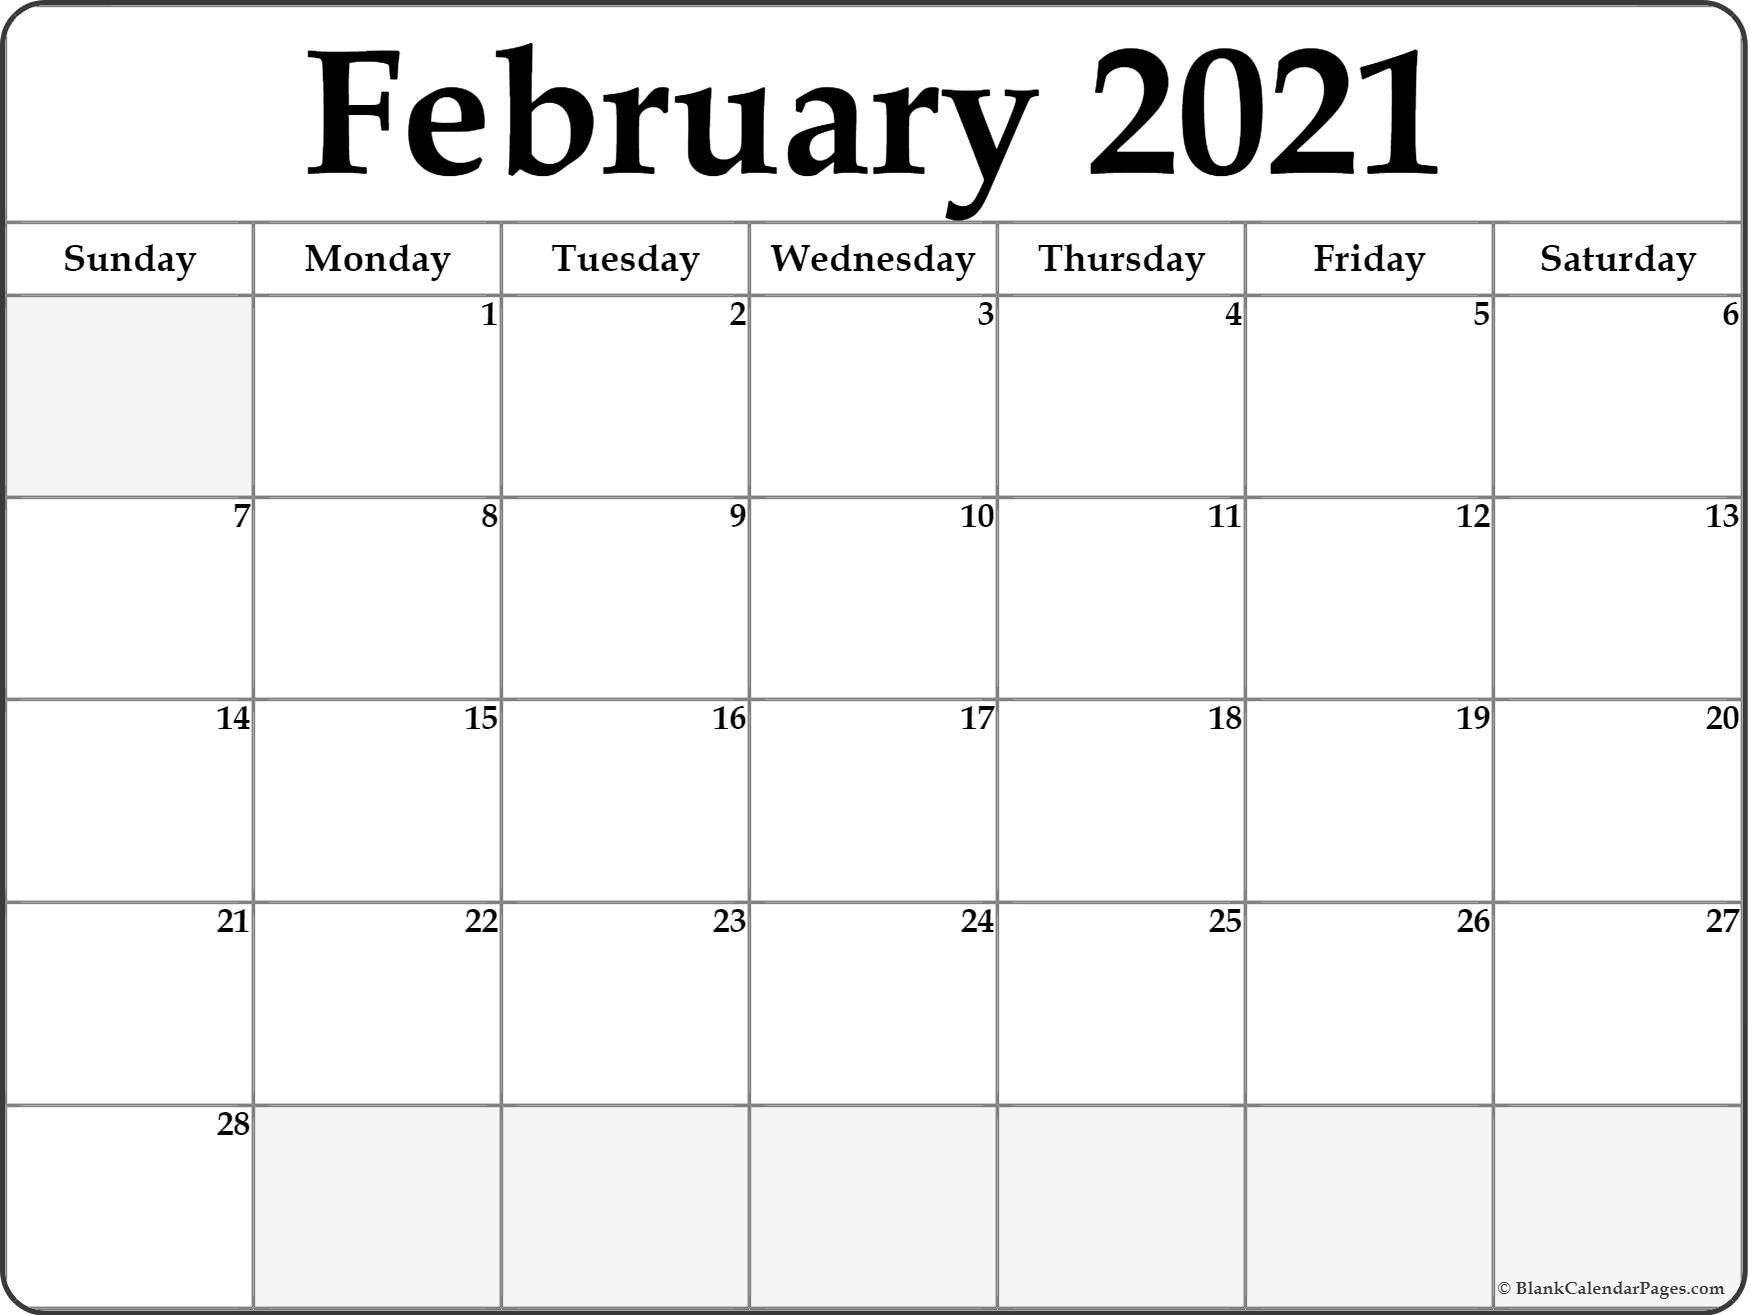 Calendar February 2021 Editable Planner In 2021 | February 2021 Writable Calendars By Month